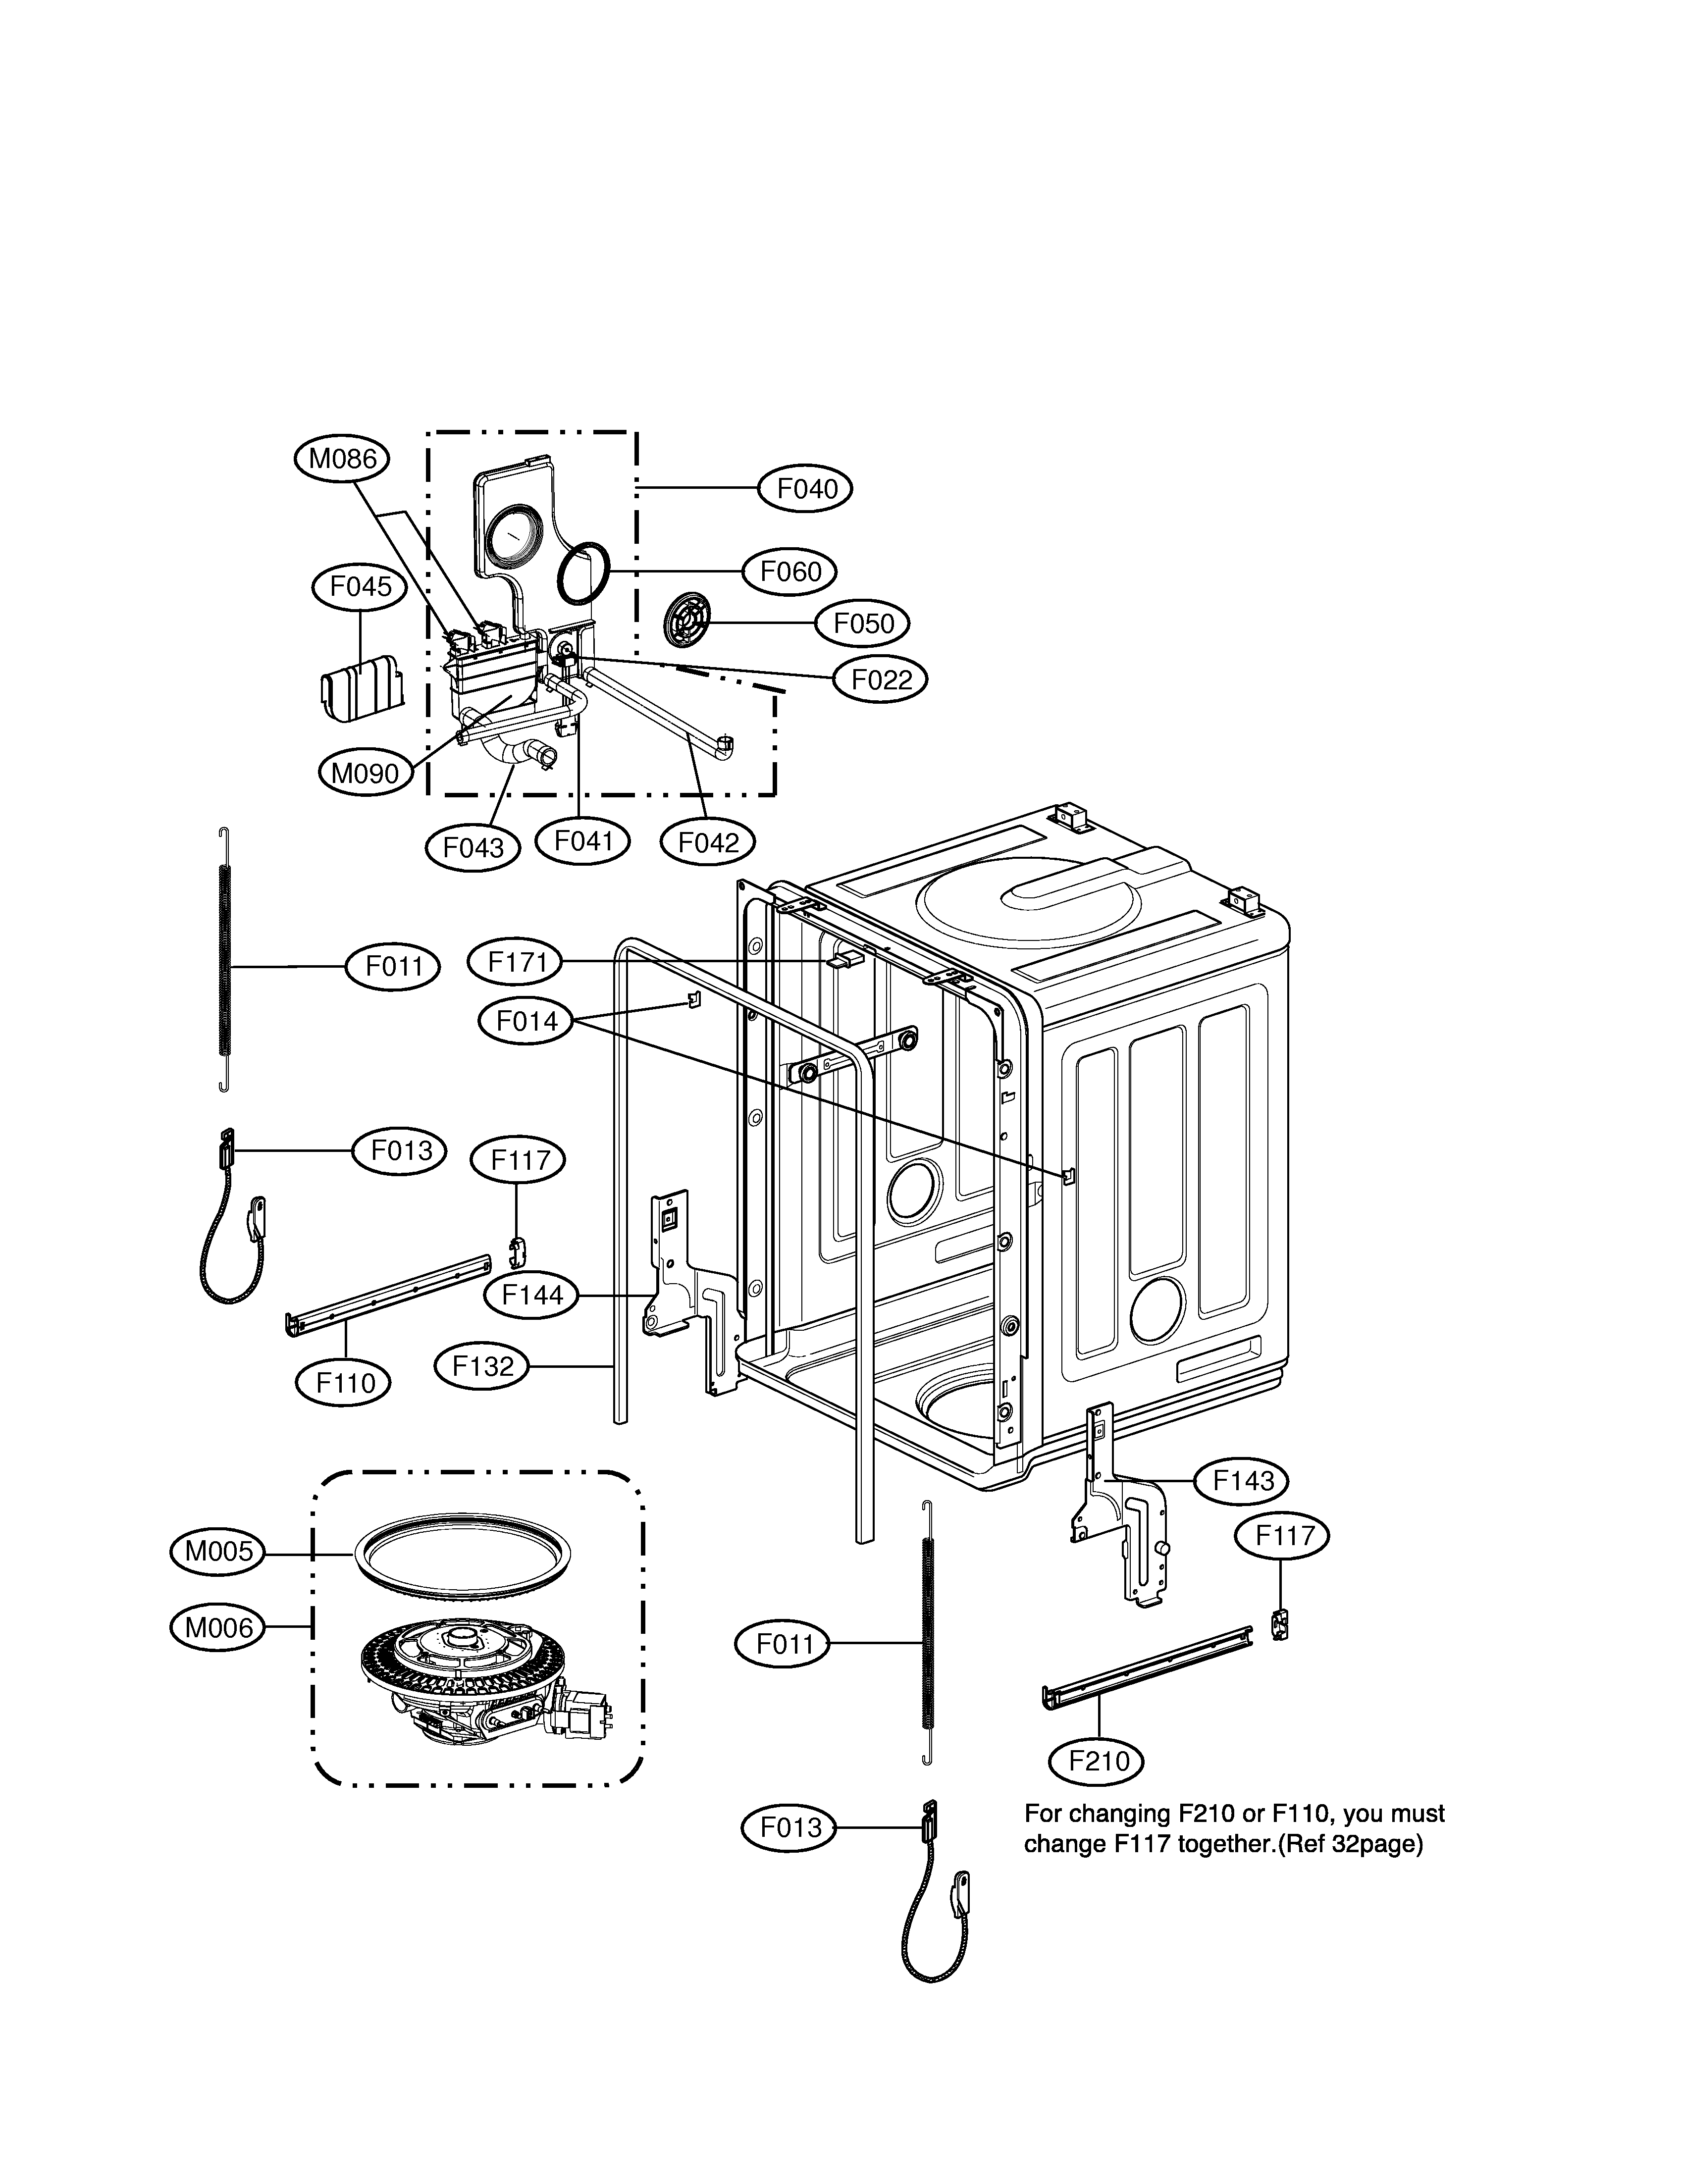 Lg Dishwasher Wiring Diagram - Wiring Diagram Schemas